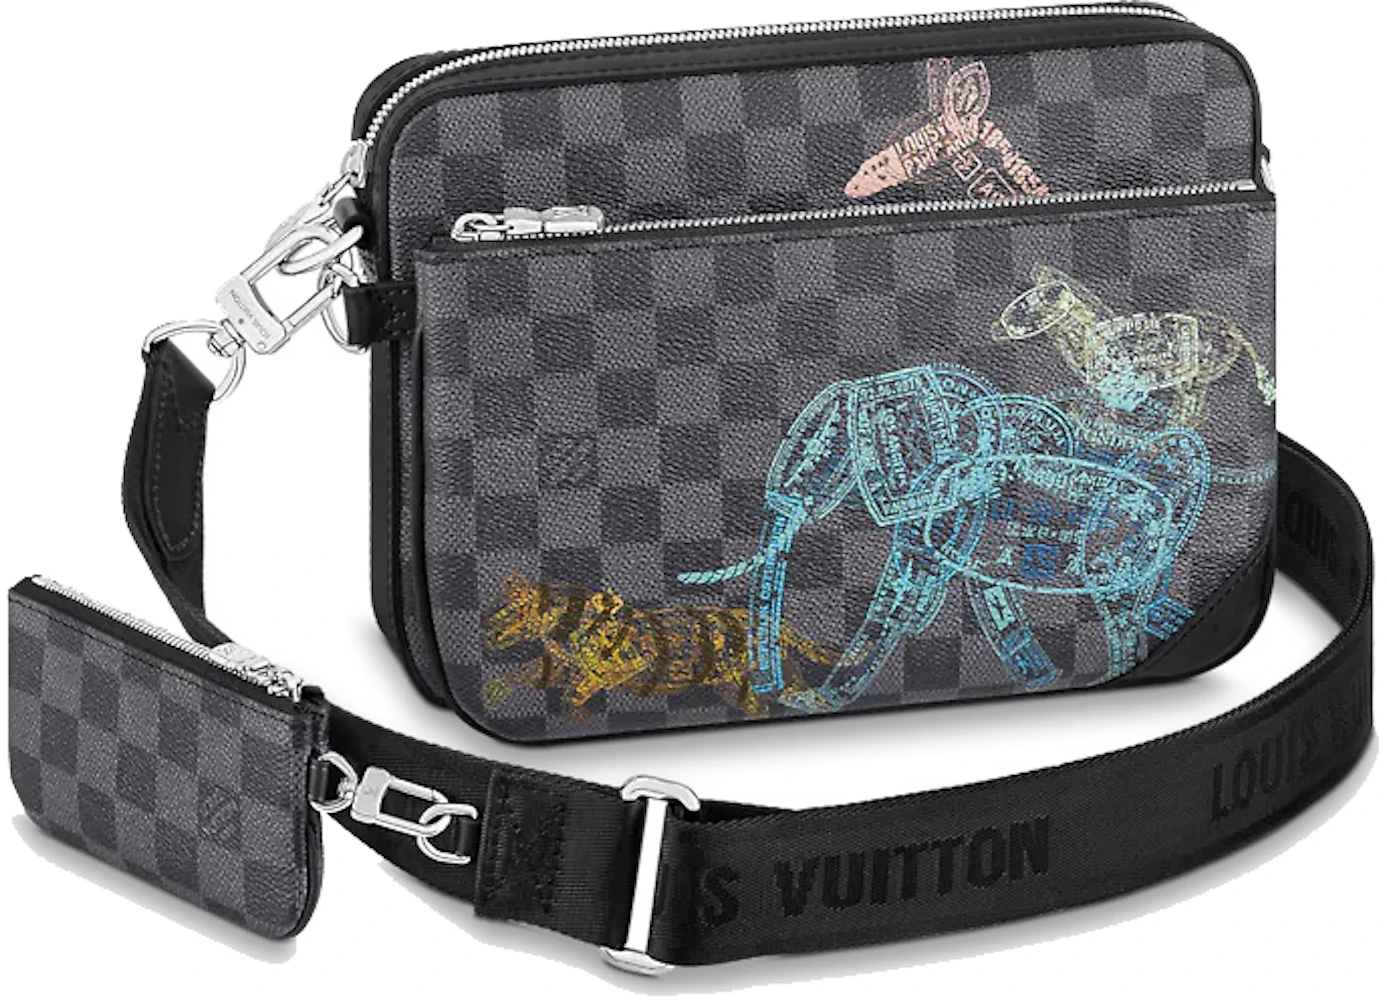 Louis Vuitton Trio Messenger Bag Grey Damier Graphite 3D in Coated